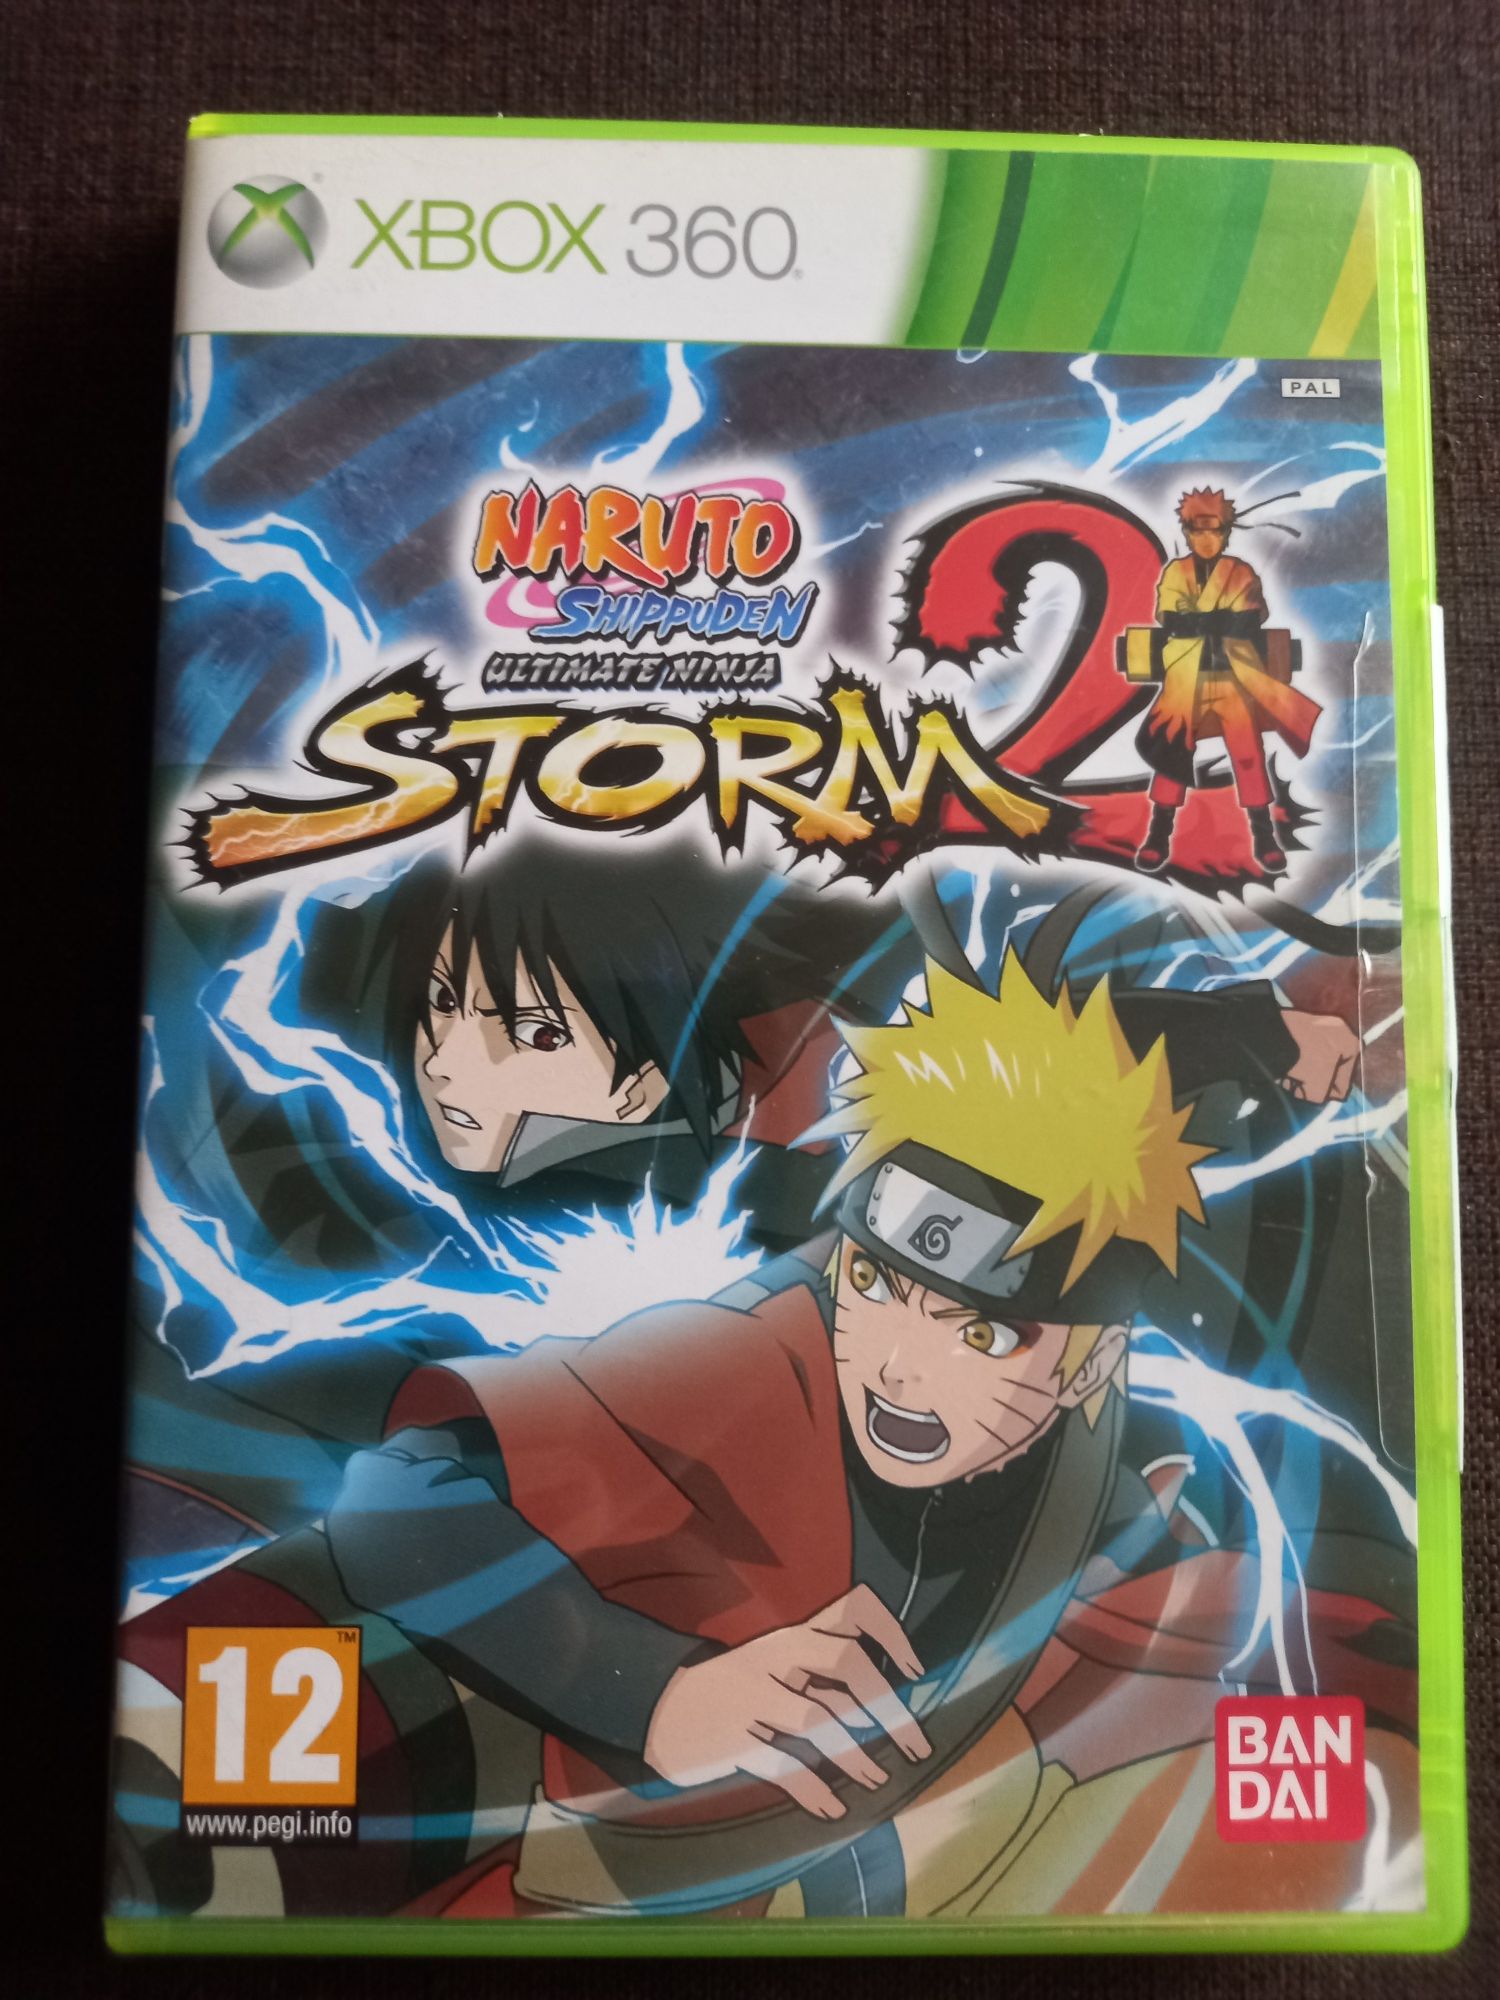 Gra Naruto Shippuden Storm 2 Ultimate Ninja na xbox 360